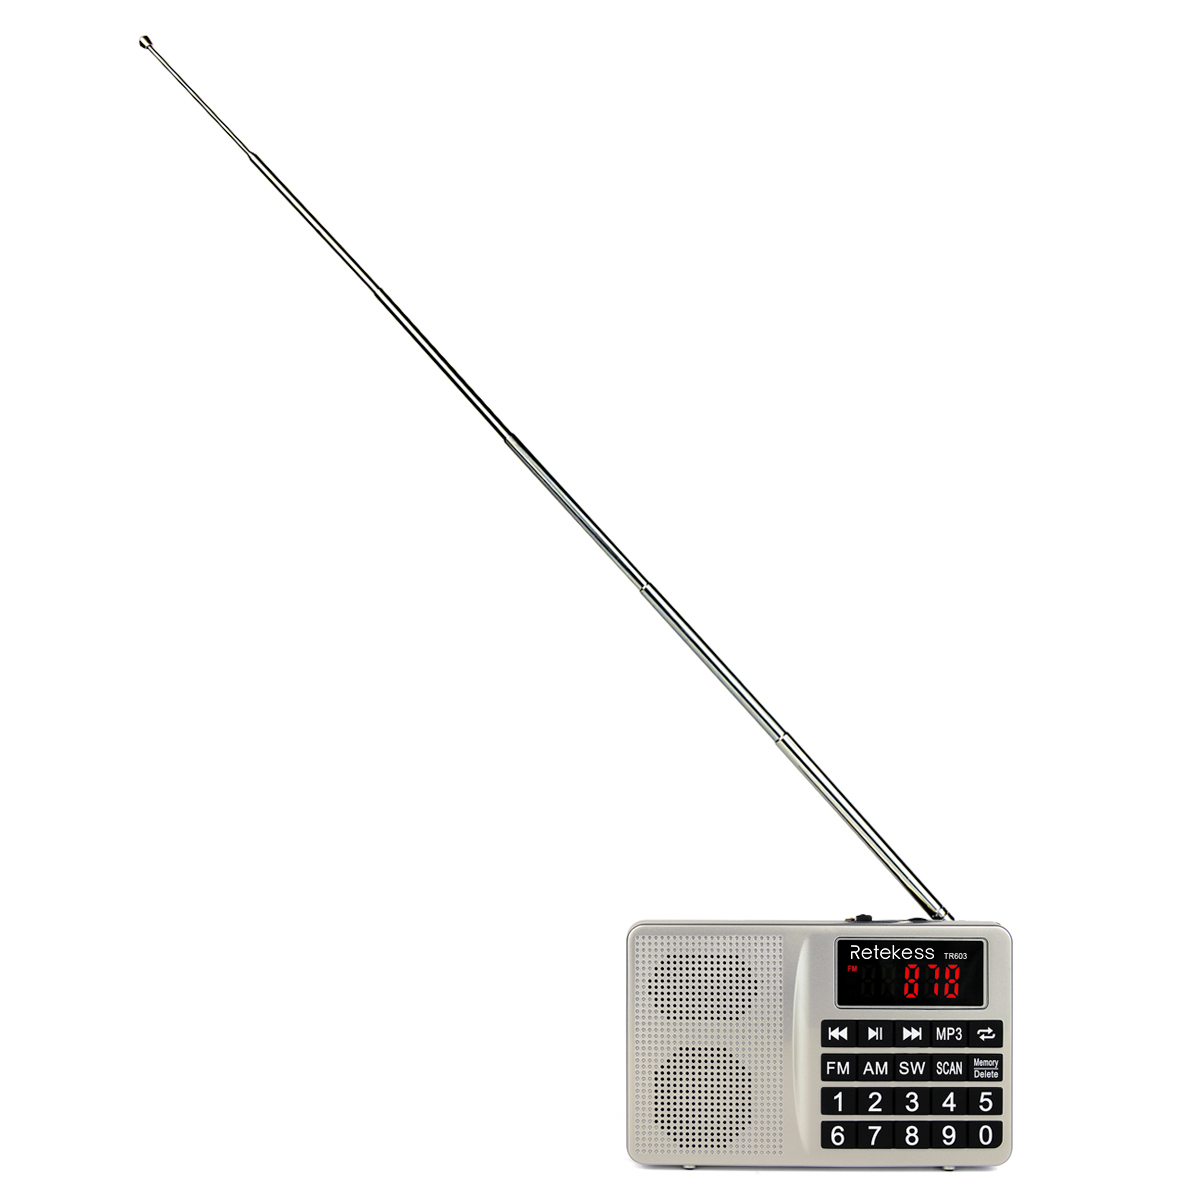 Retekess TR603 Portable AM FM Radio Shortwave Radio